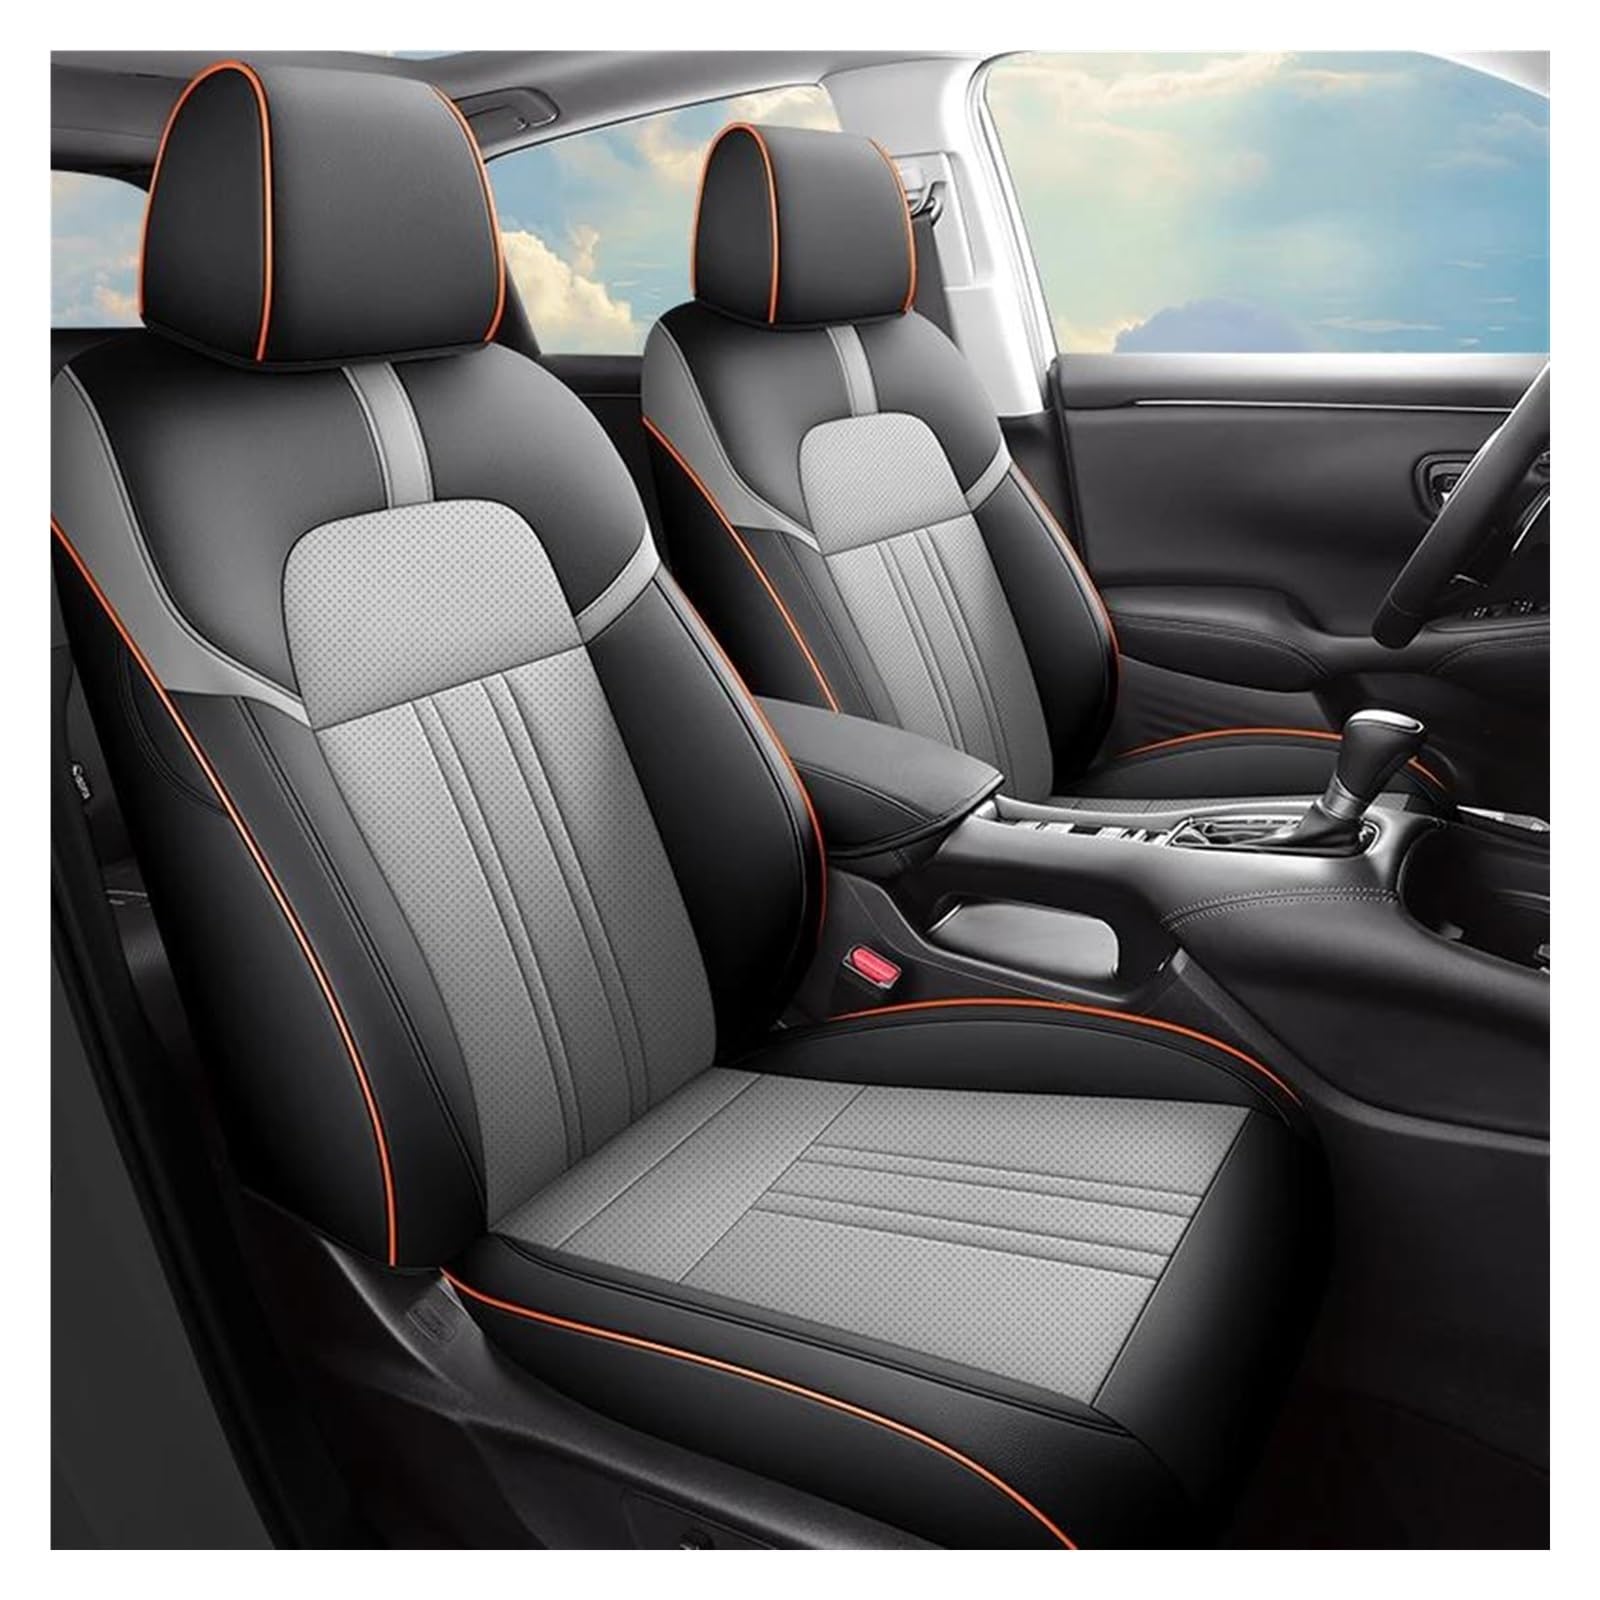 FOGJCMET Auto-Sitzbezüge Für HRV 2014 2015 2017 2019 Custom Full Set Leder Autositzbezüge Innenzubehör Autositzschoner(Black gray,Standard Edition) von FOGJCMET